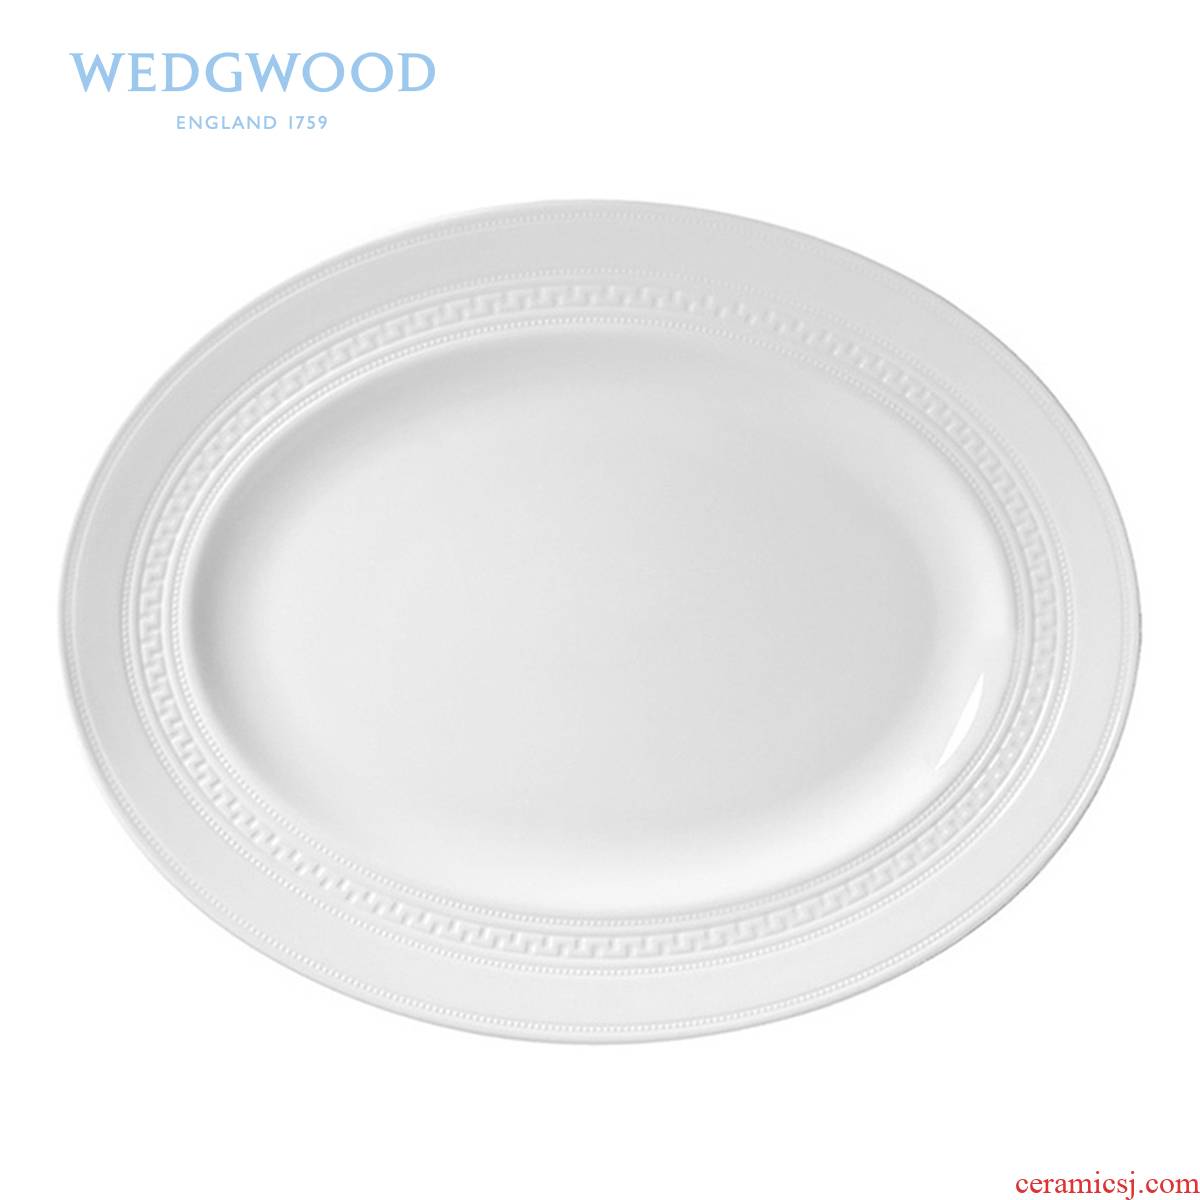 Wedgwood waterford Wedgwood Intaglio anaglyph 35 cm ipads China big fish dish of high - grade ipads China tableware